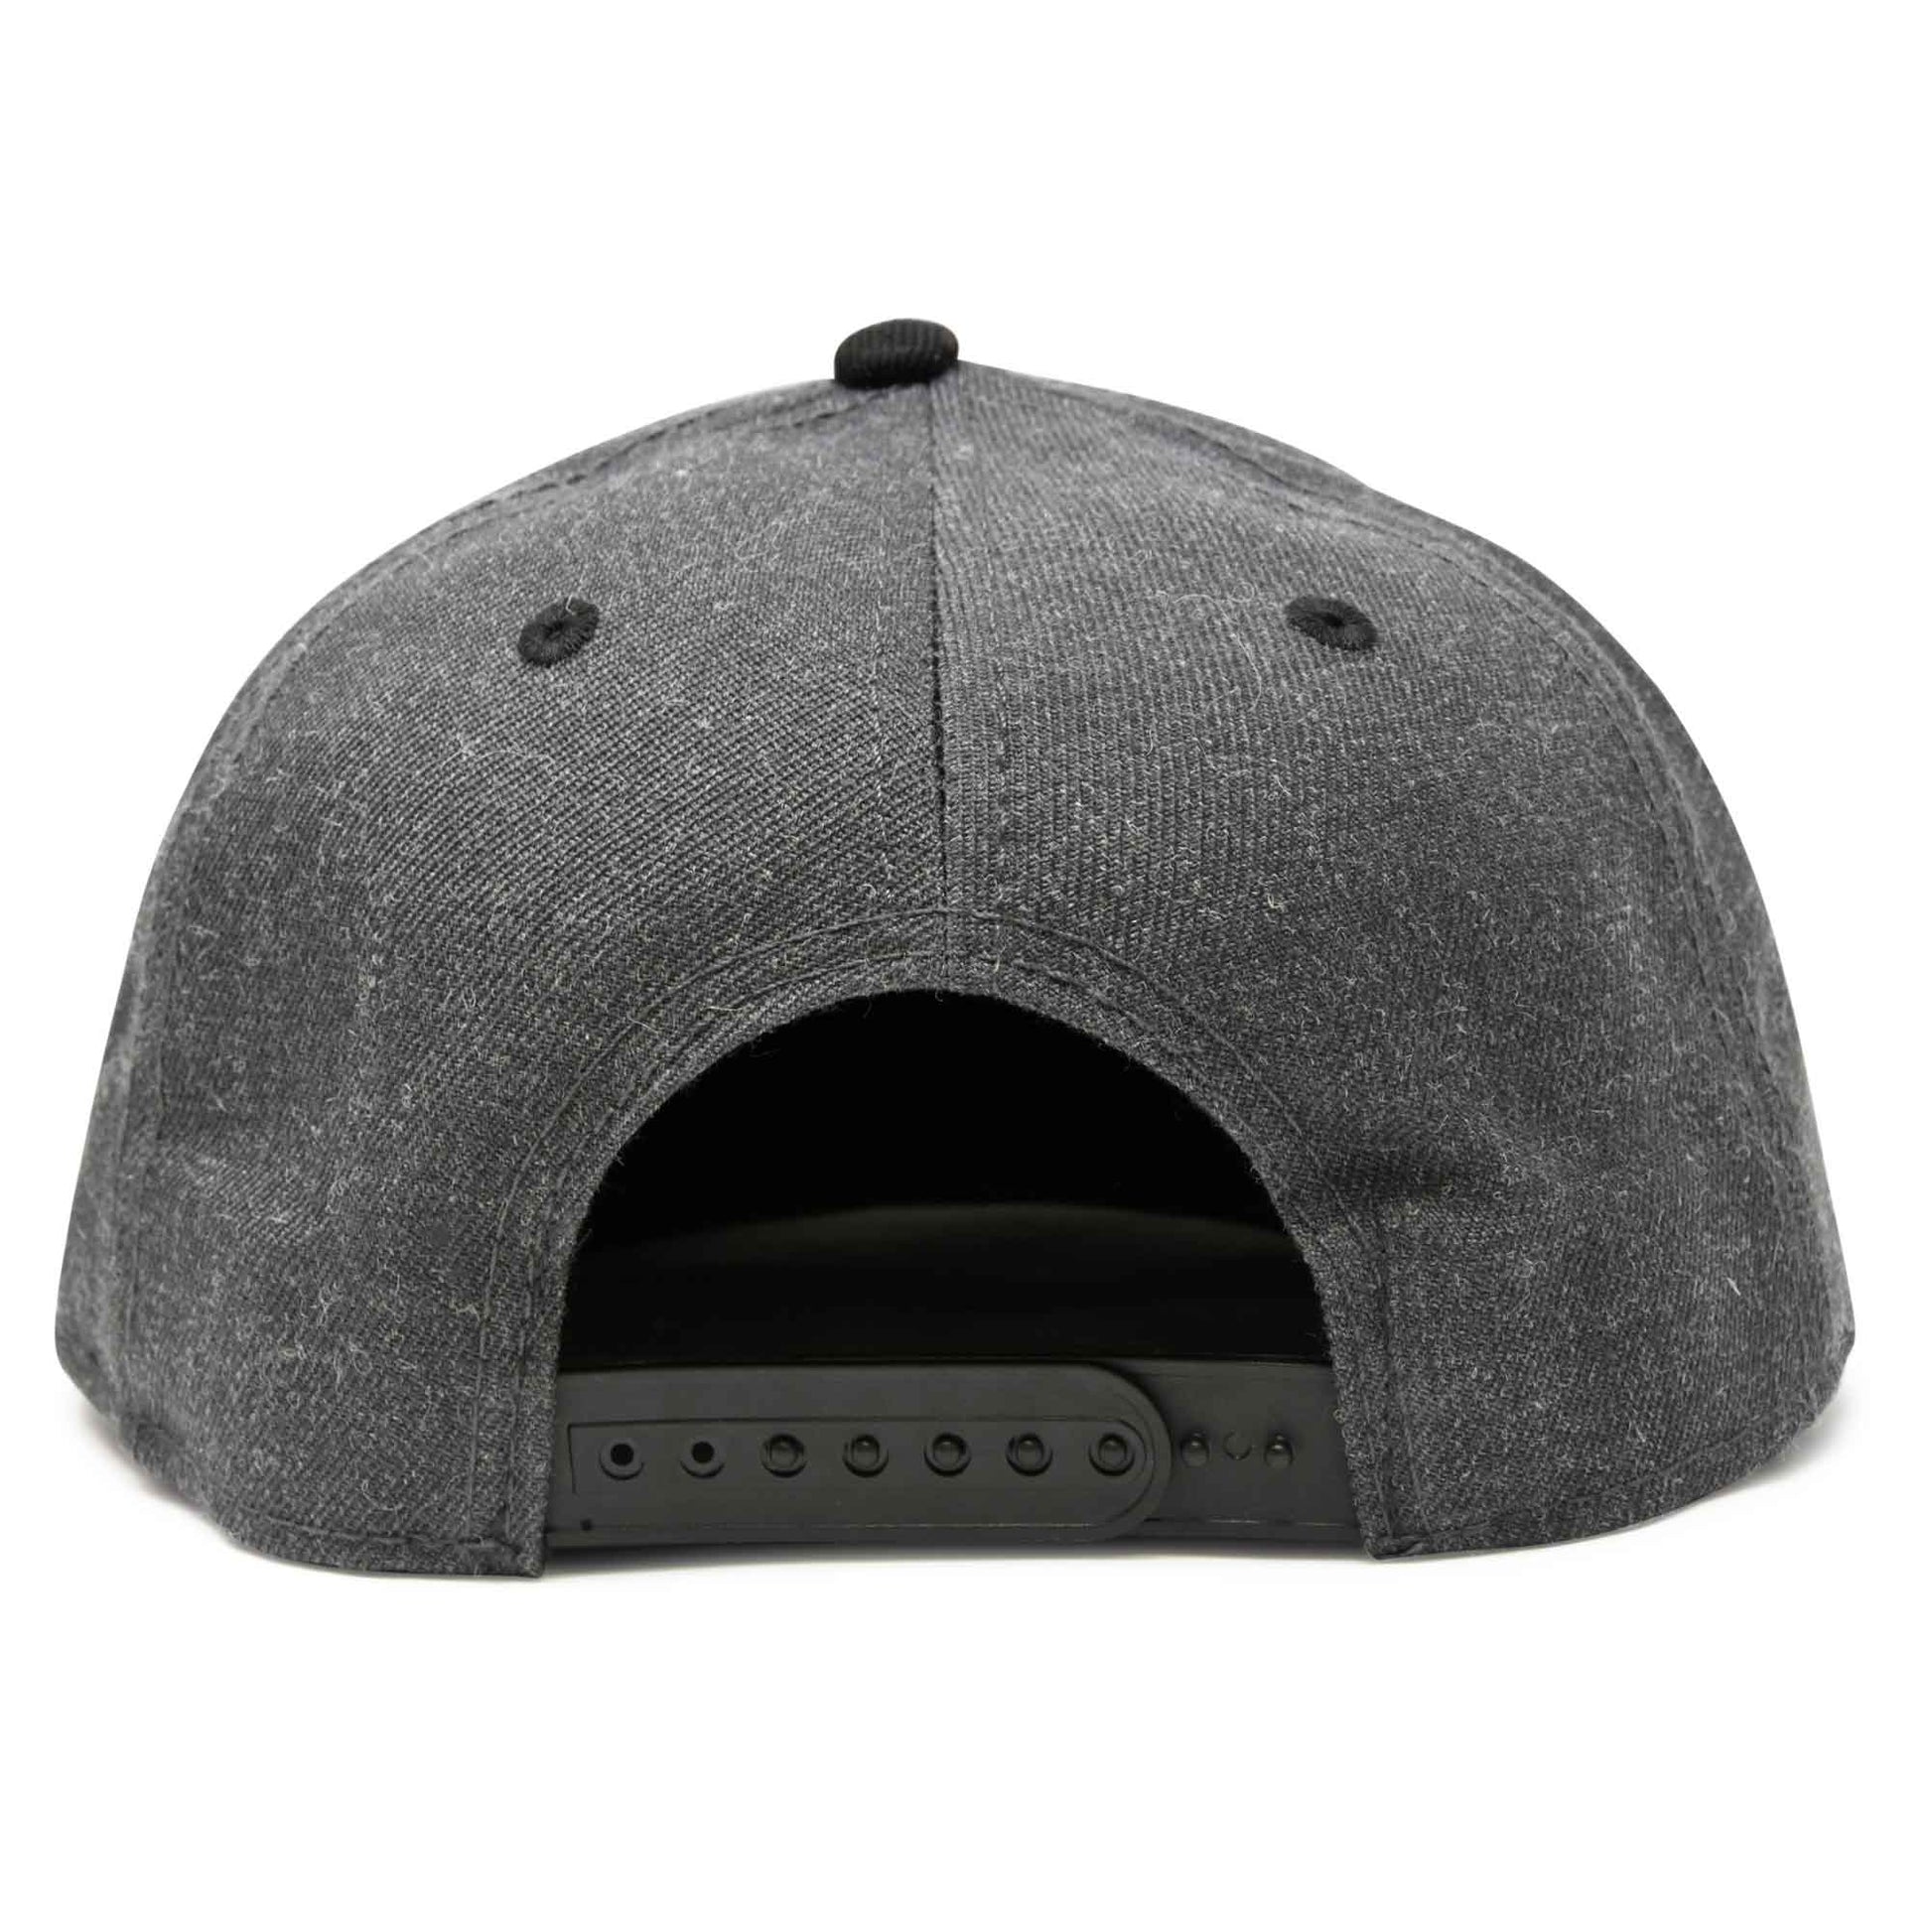 Dalix Ghost Snapback Flat Bill Baseball Hat Embroidered Cap Mens in Black Light Gray